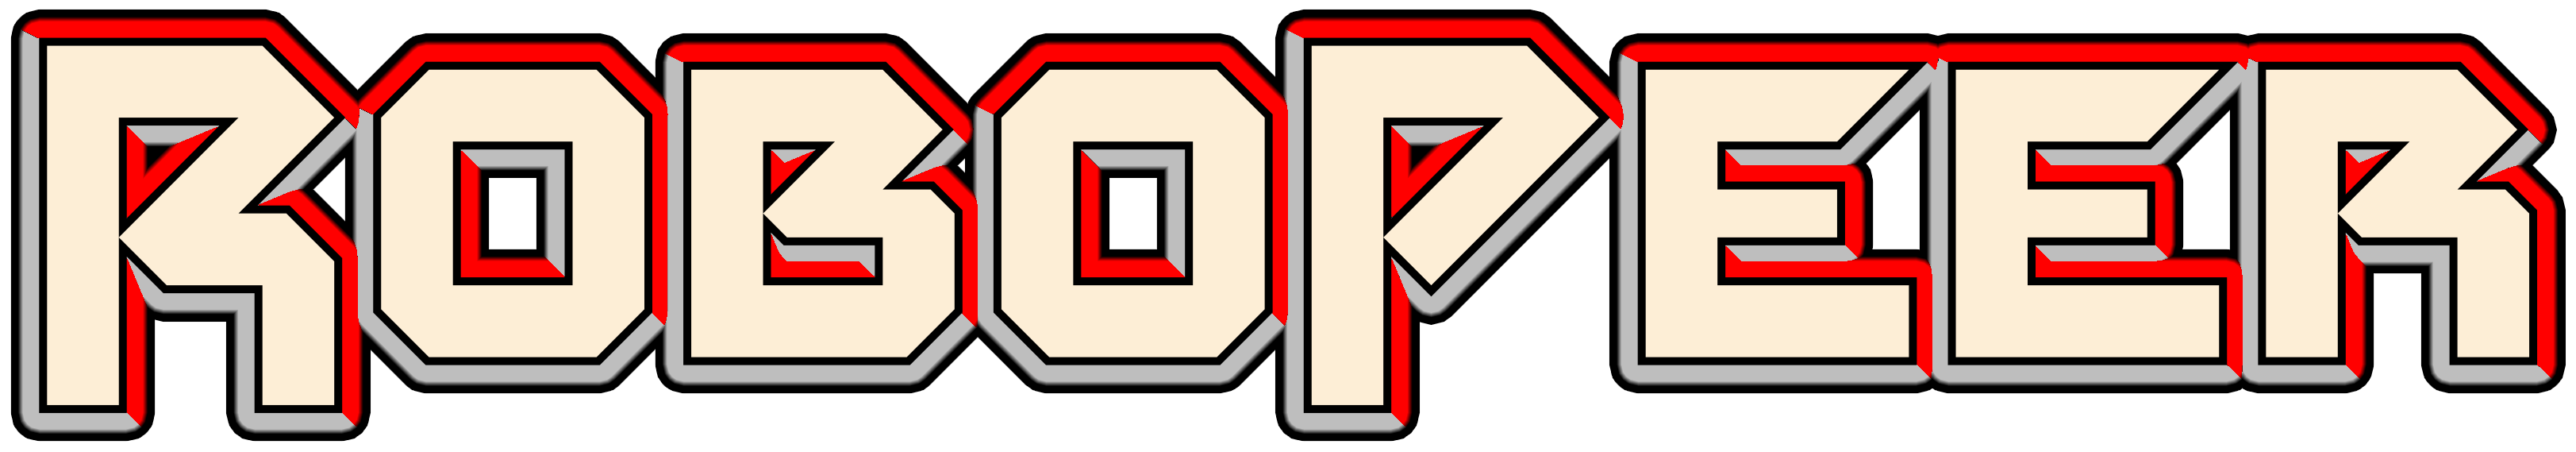 robopeer logo